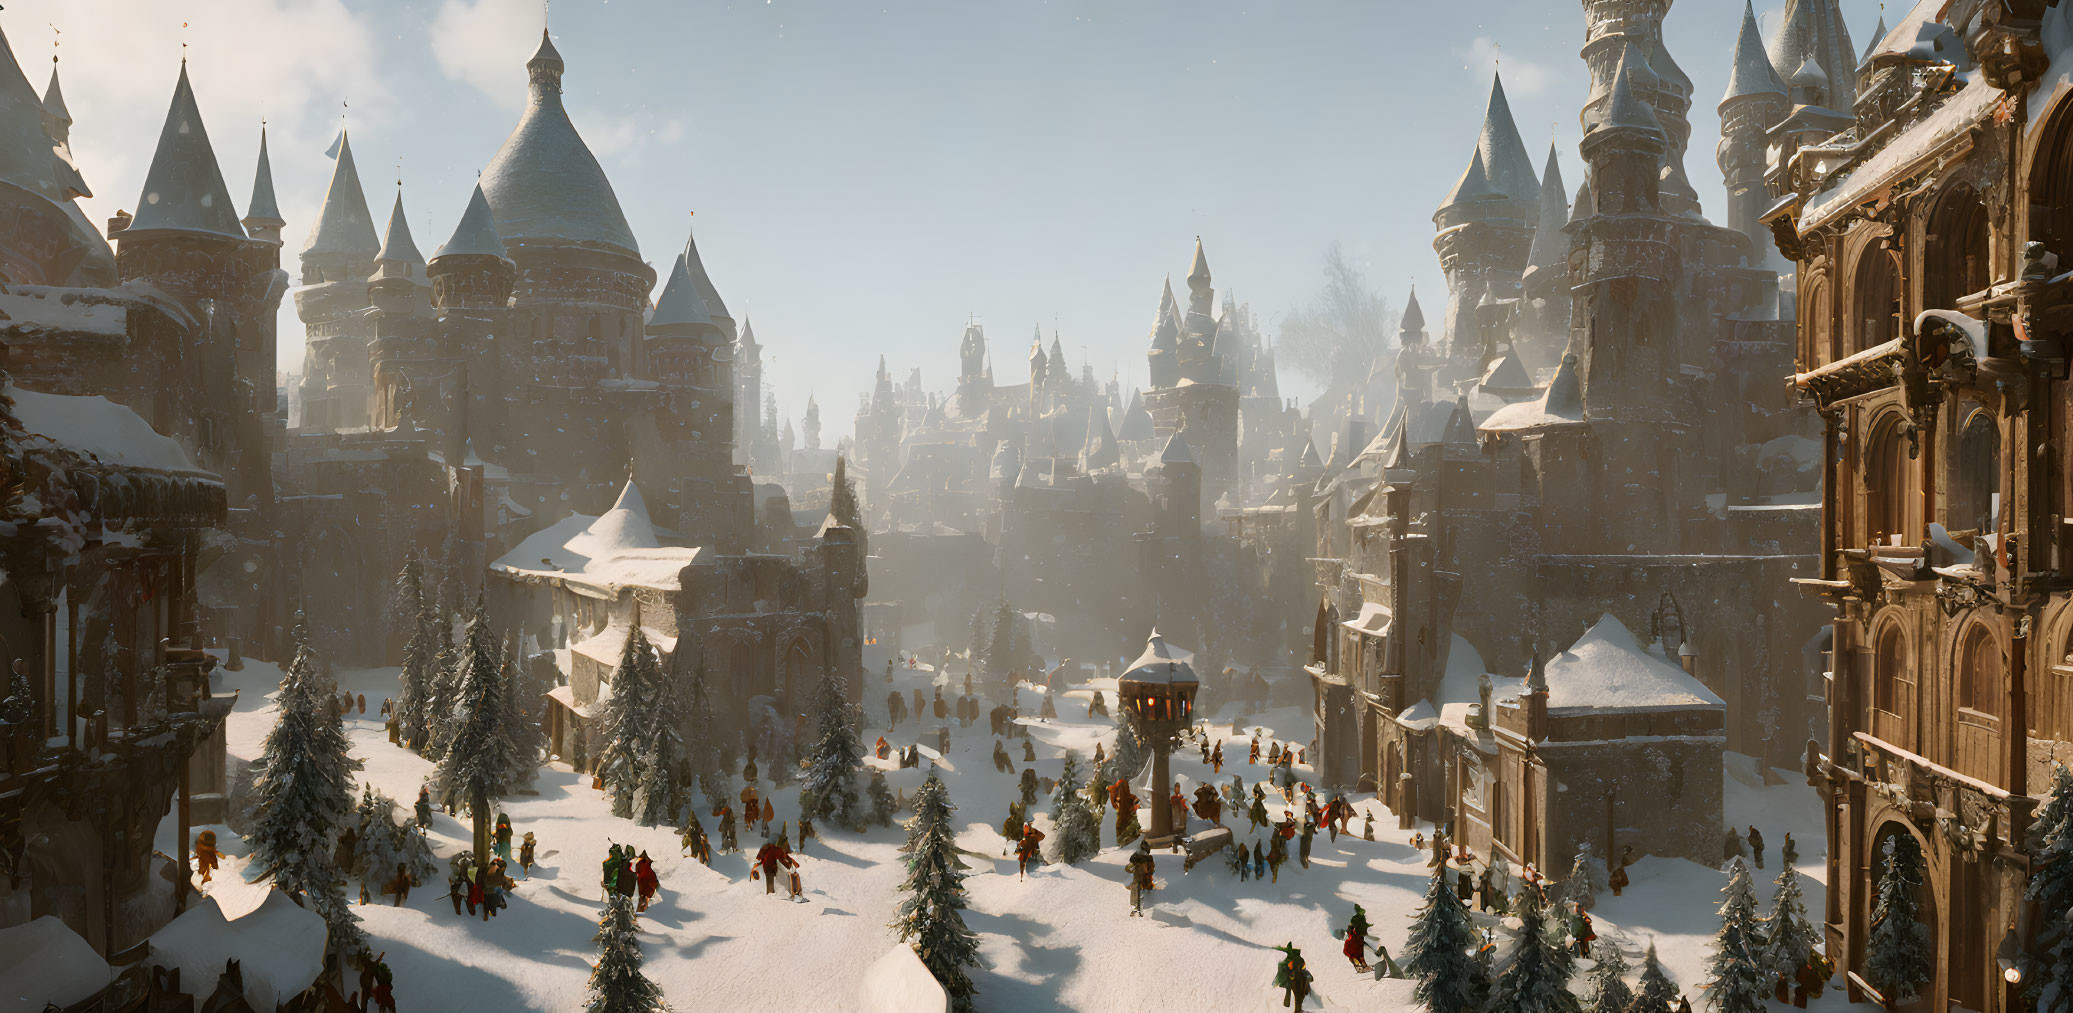 Medieval snowy city based on Whiterun